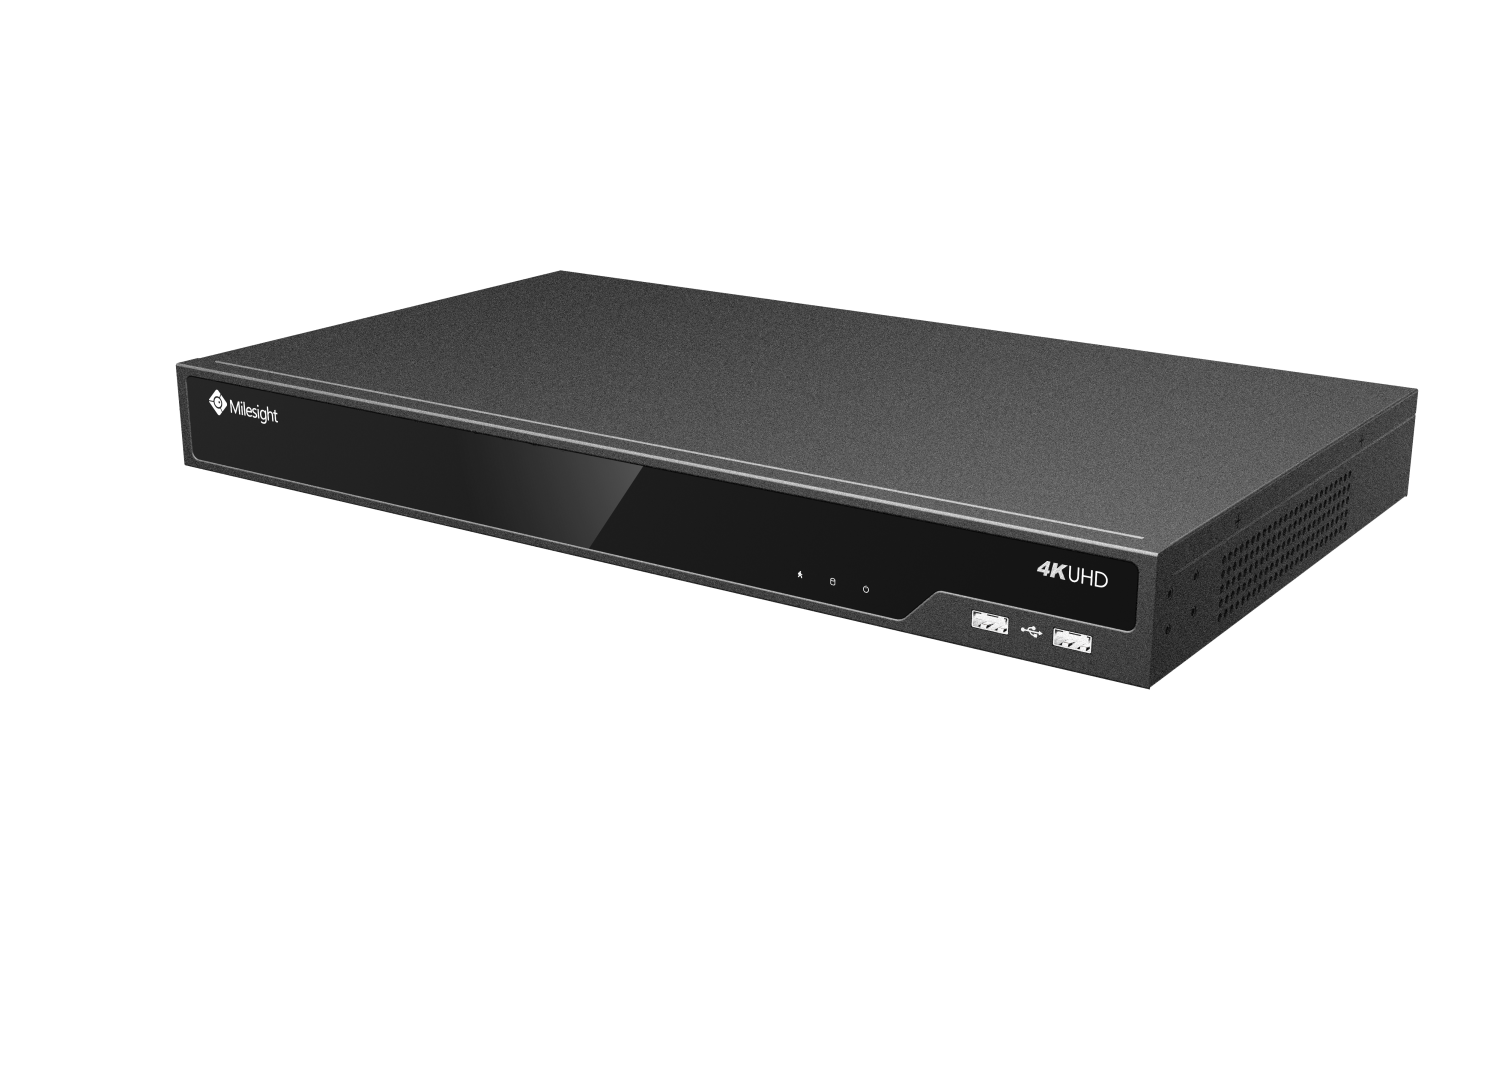 Milesight MS-n5016-UT. Сетевой видеорегистратор bolid RGI-1622p16. IP видеорегистратор для видеонаблюдения. Milesight MS-n5032-uh.